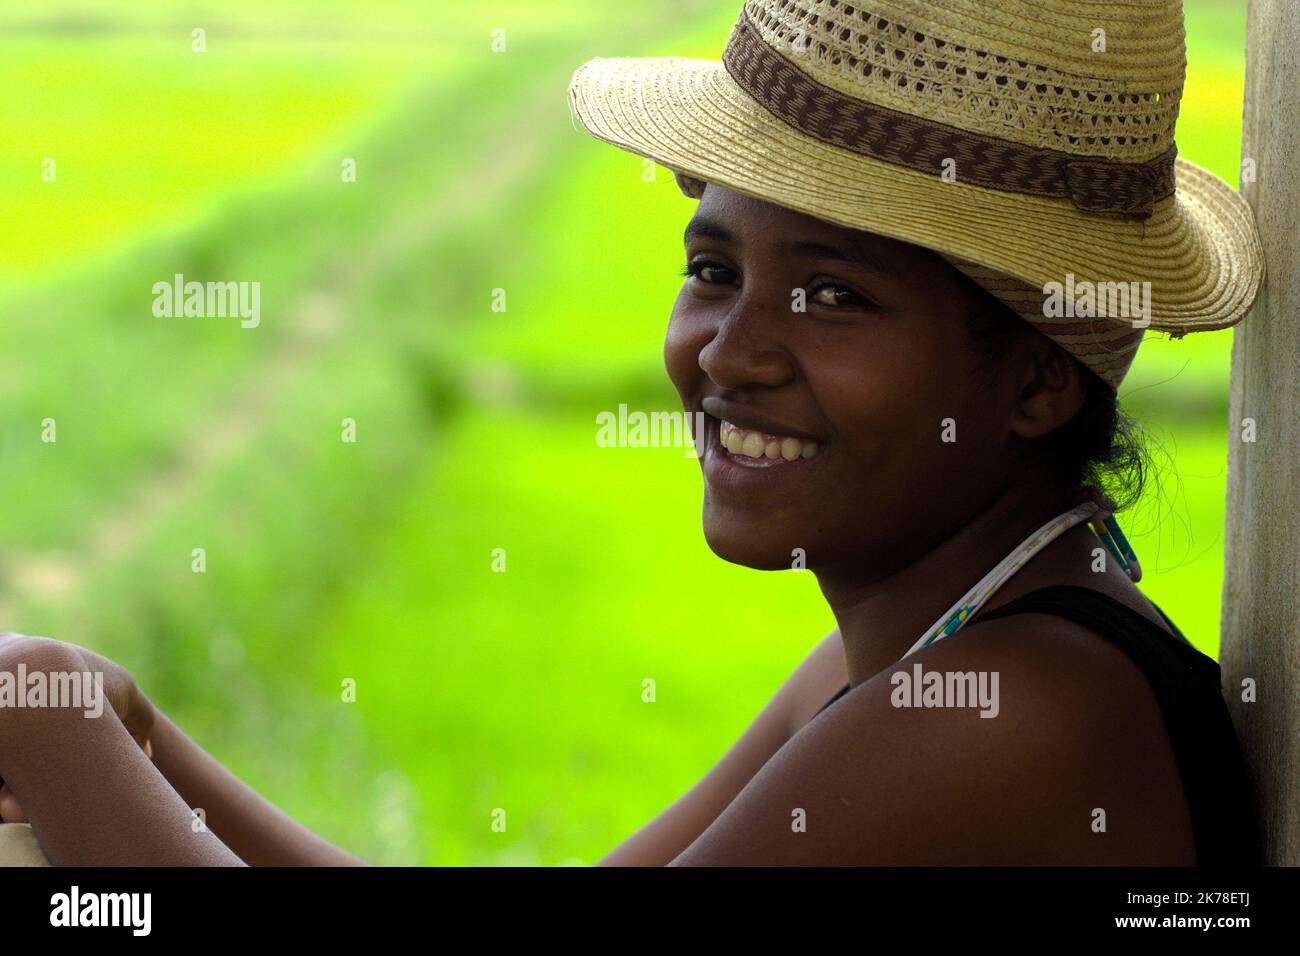 ©Arnaud De Grave / Le Pictorium/MAXPPP - Arnaud De Grave / Le Pictorium - 29/11/2015  -  Madagascar / Alaotra-Mangoro  -  Jeune fille malgache au chapeau de paille.  / 29/11/2015  -  Madagascar / Alaotra-Mangoro  -  Young malagasy girl with a straw hat. Stock Photo